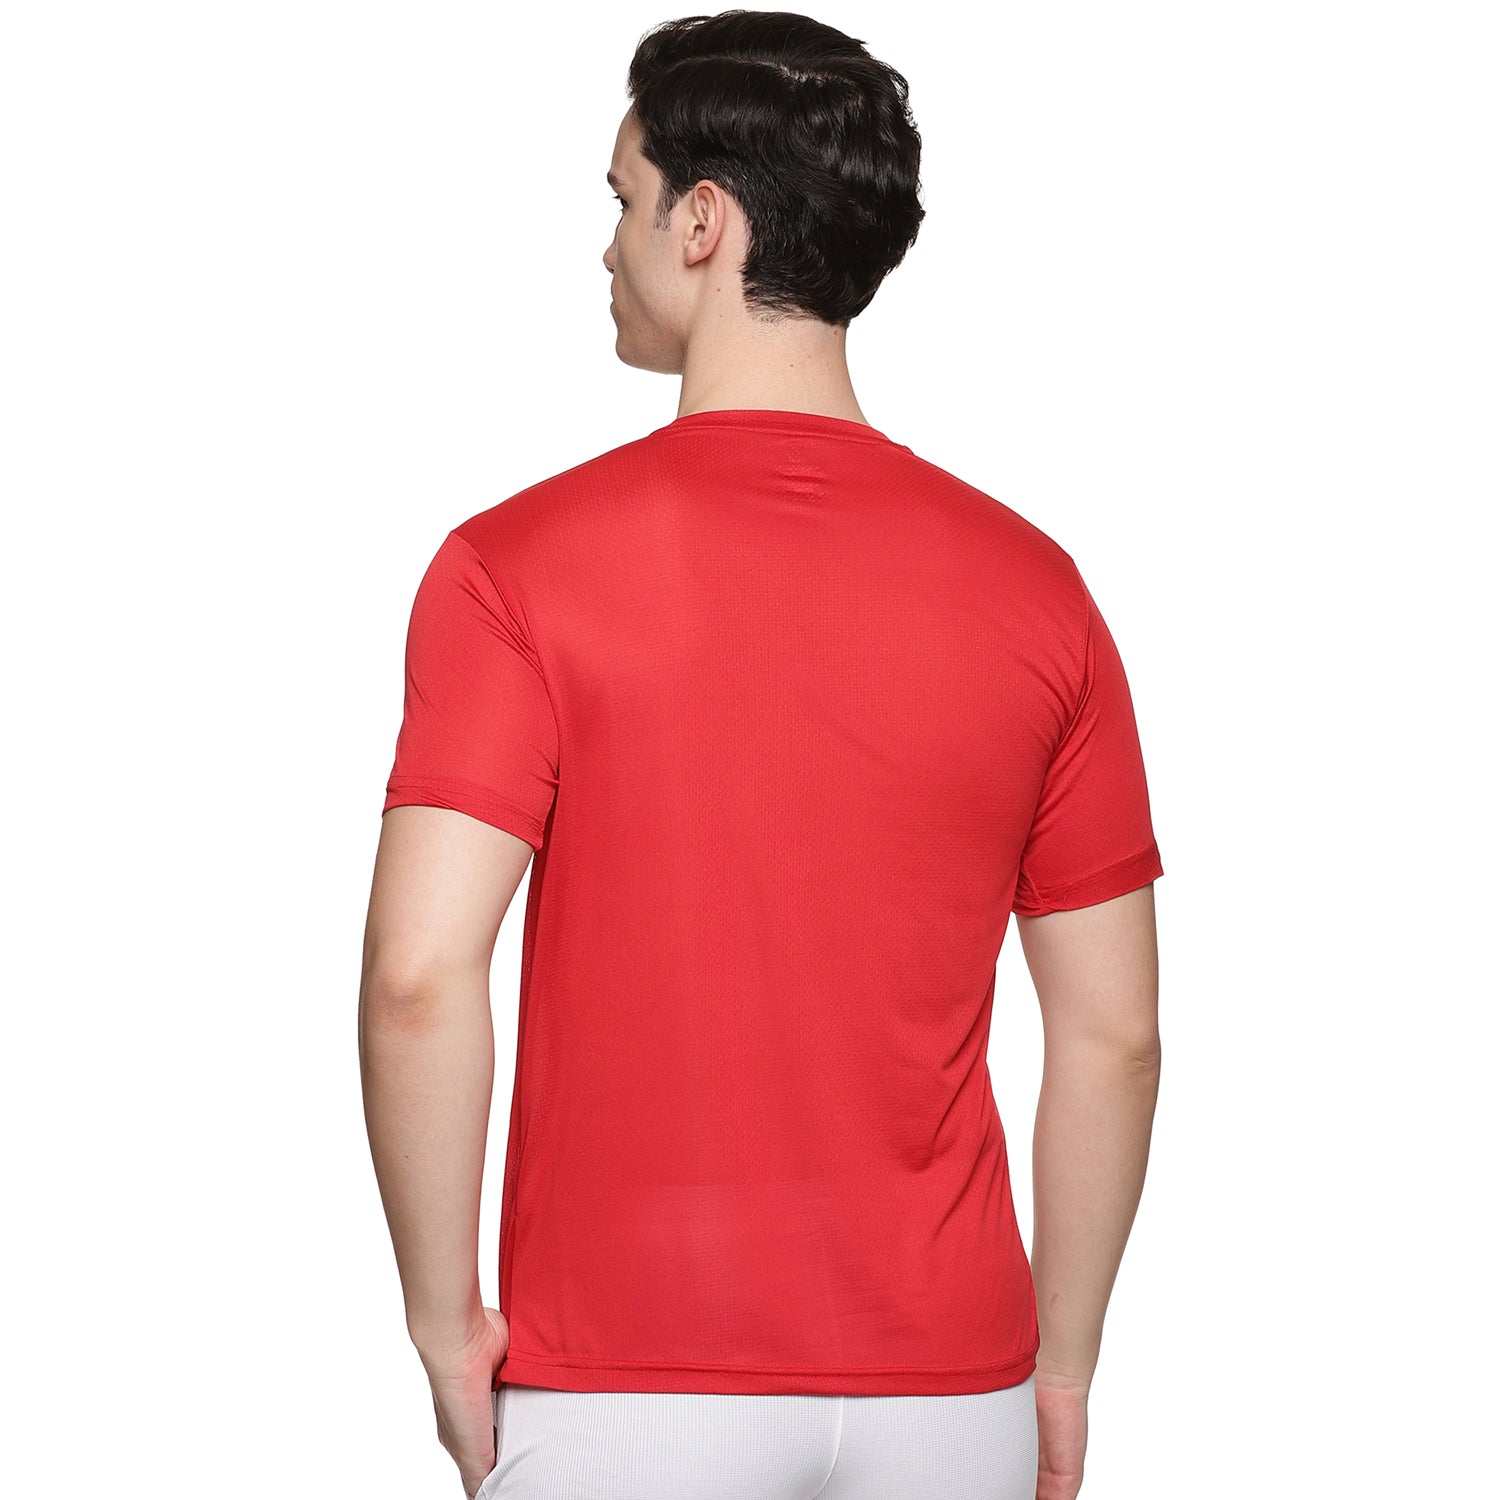 Prokick Plain Half Sleeves Badminton T-Shirt - Best Price online Prokicksports.com